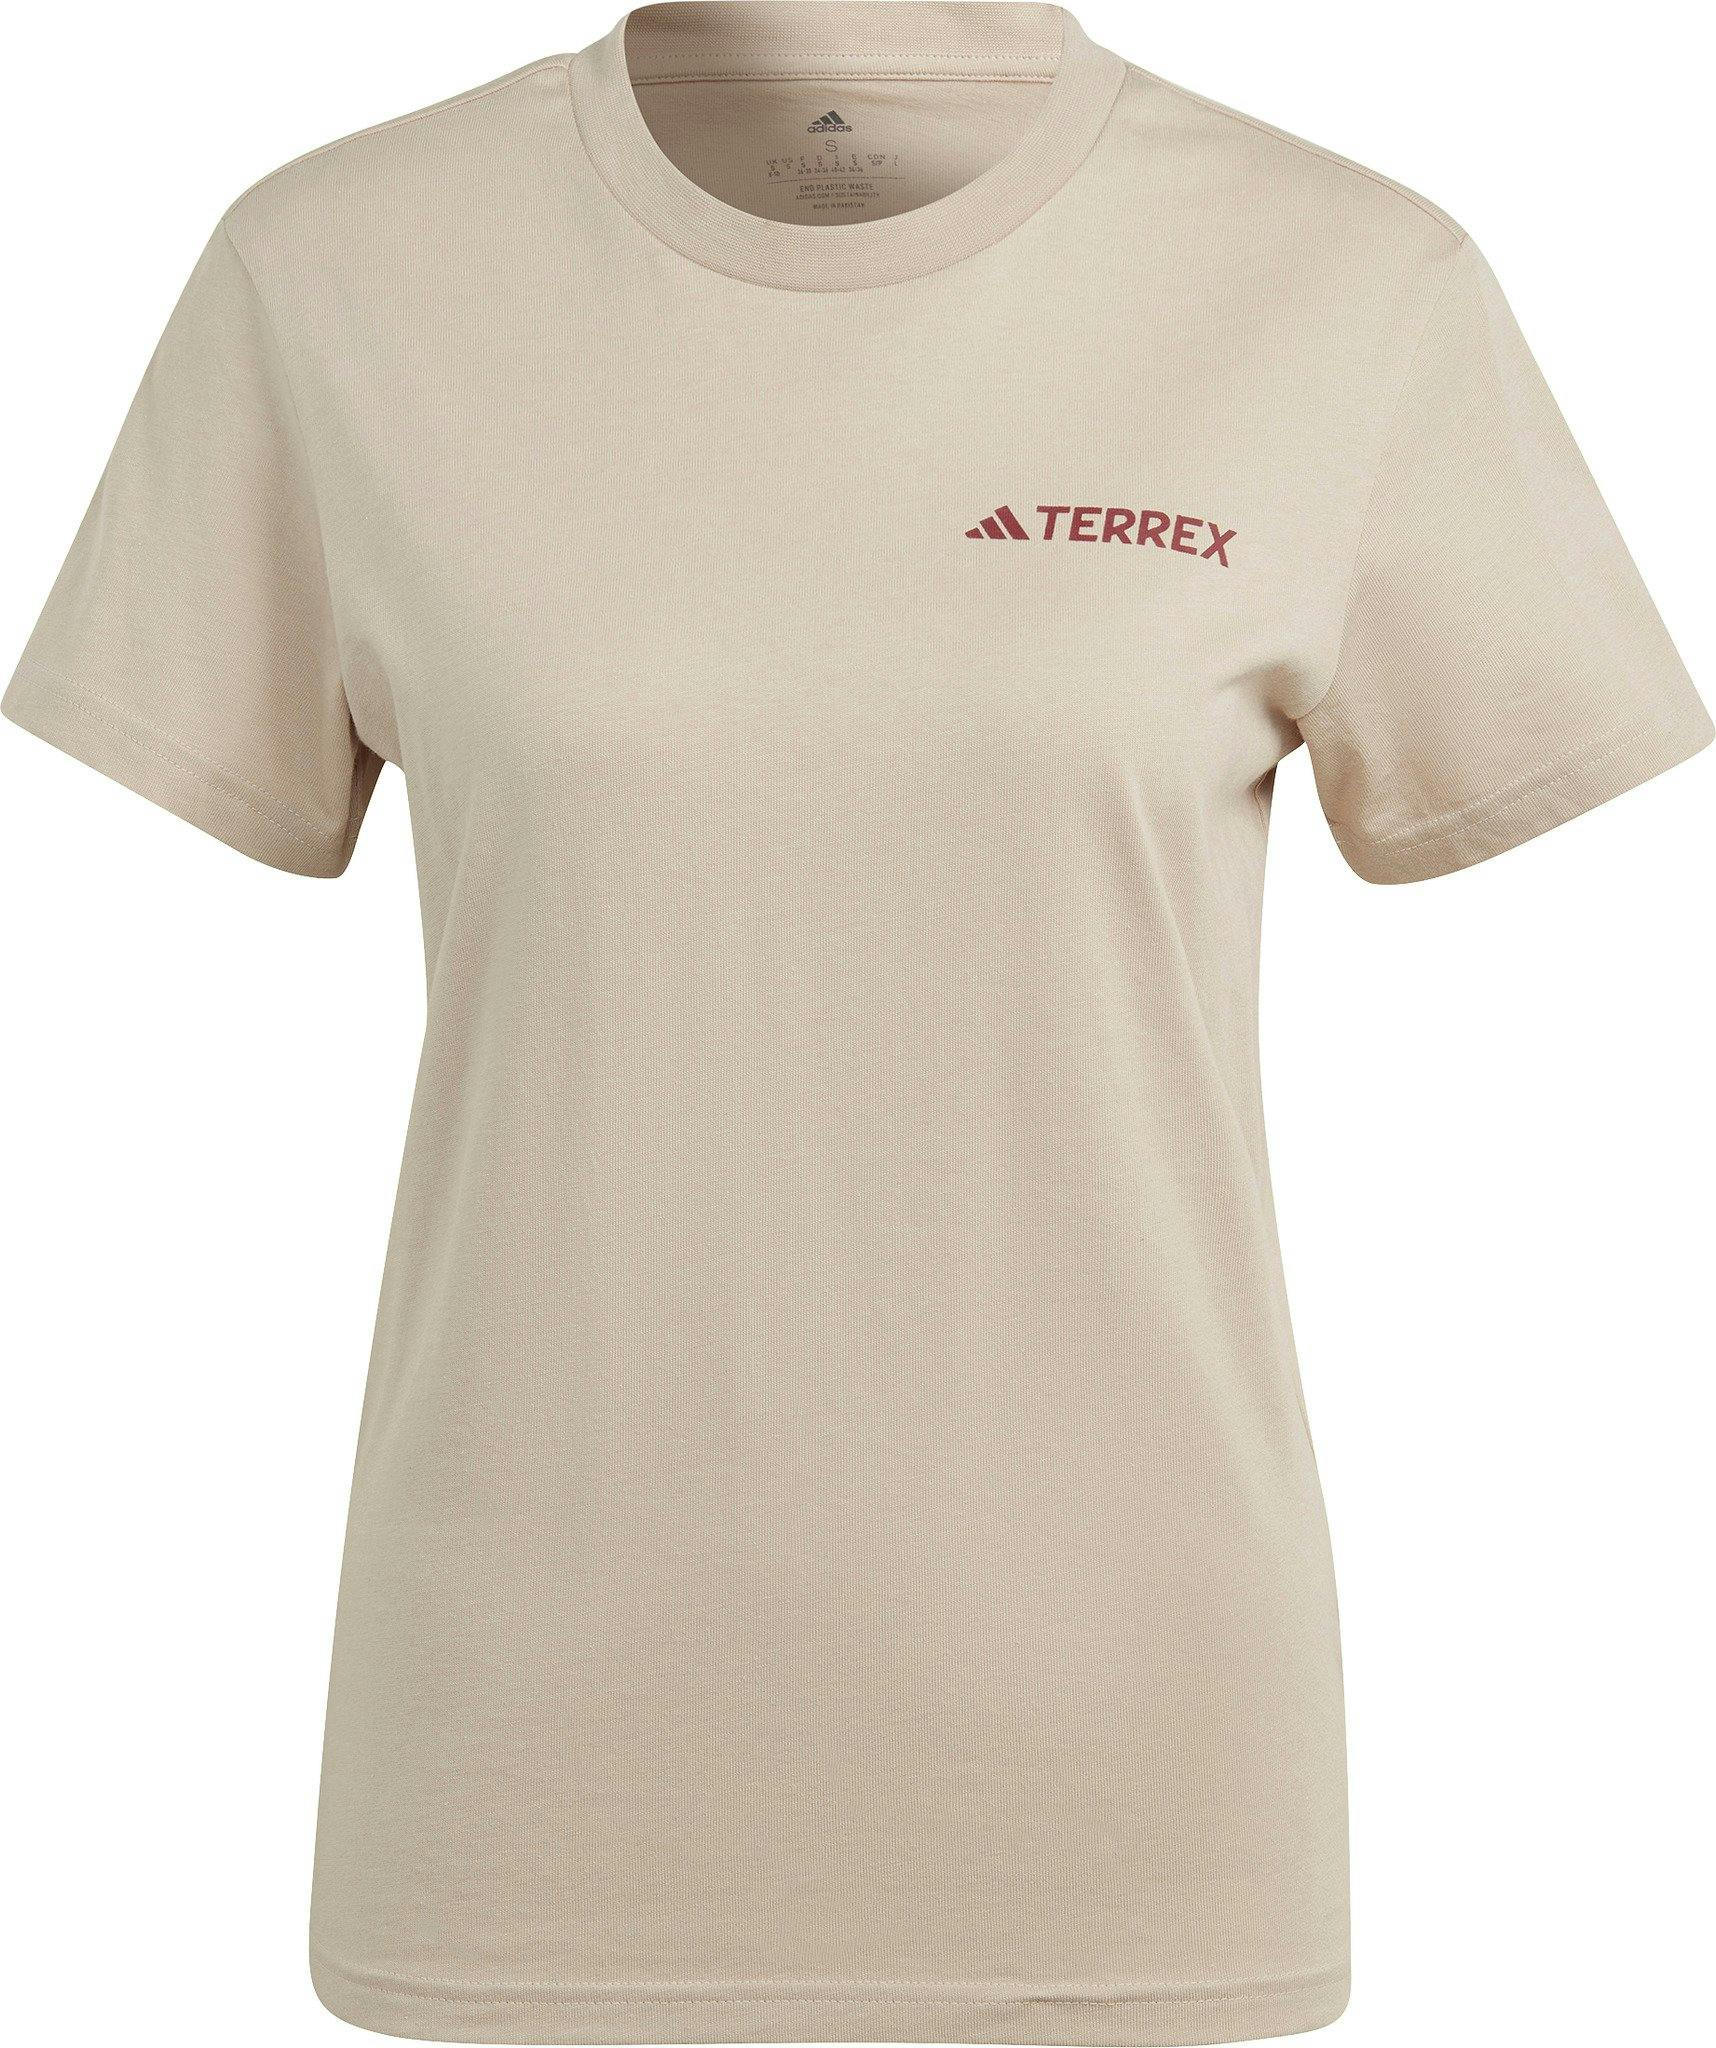 Product image for Terrex Graphic MTN 2.0 Tee - Women's